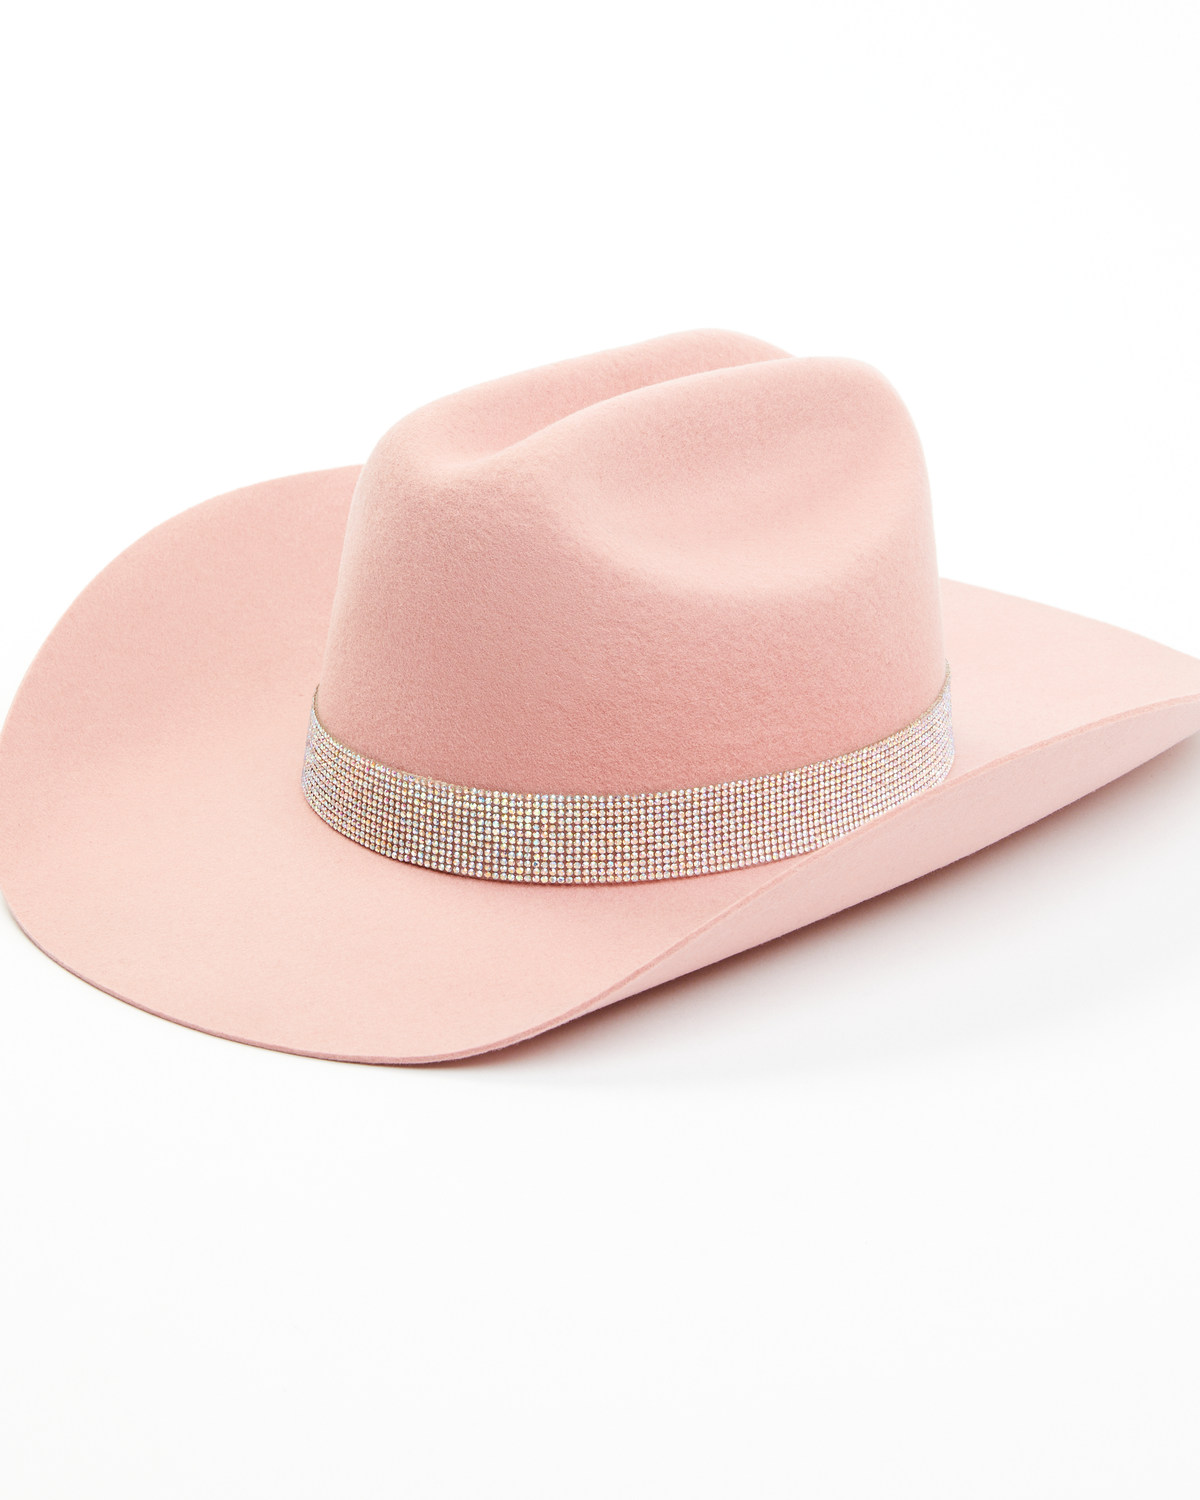 Idyllwind Women's Pink Rosecliff Western Wool & Rhinestone Cowboy Hat